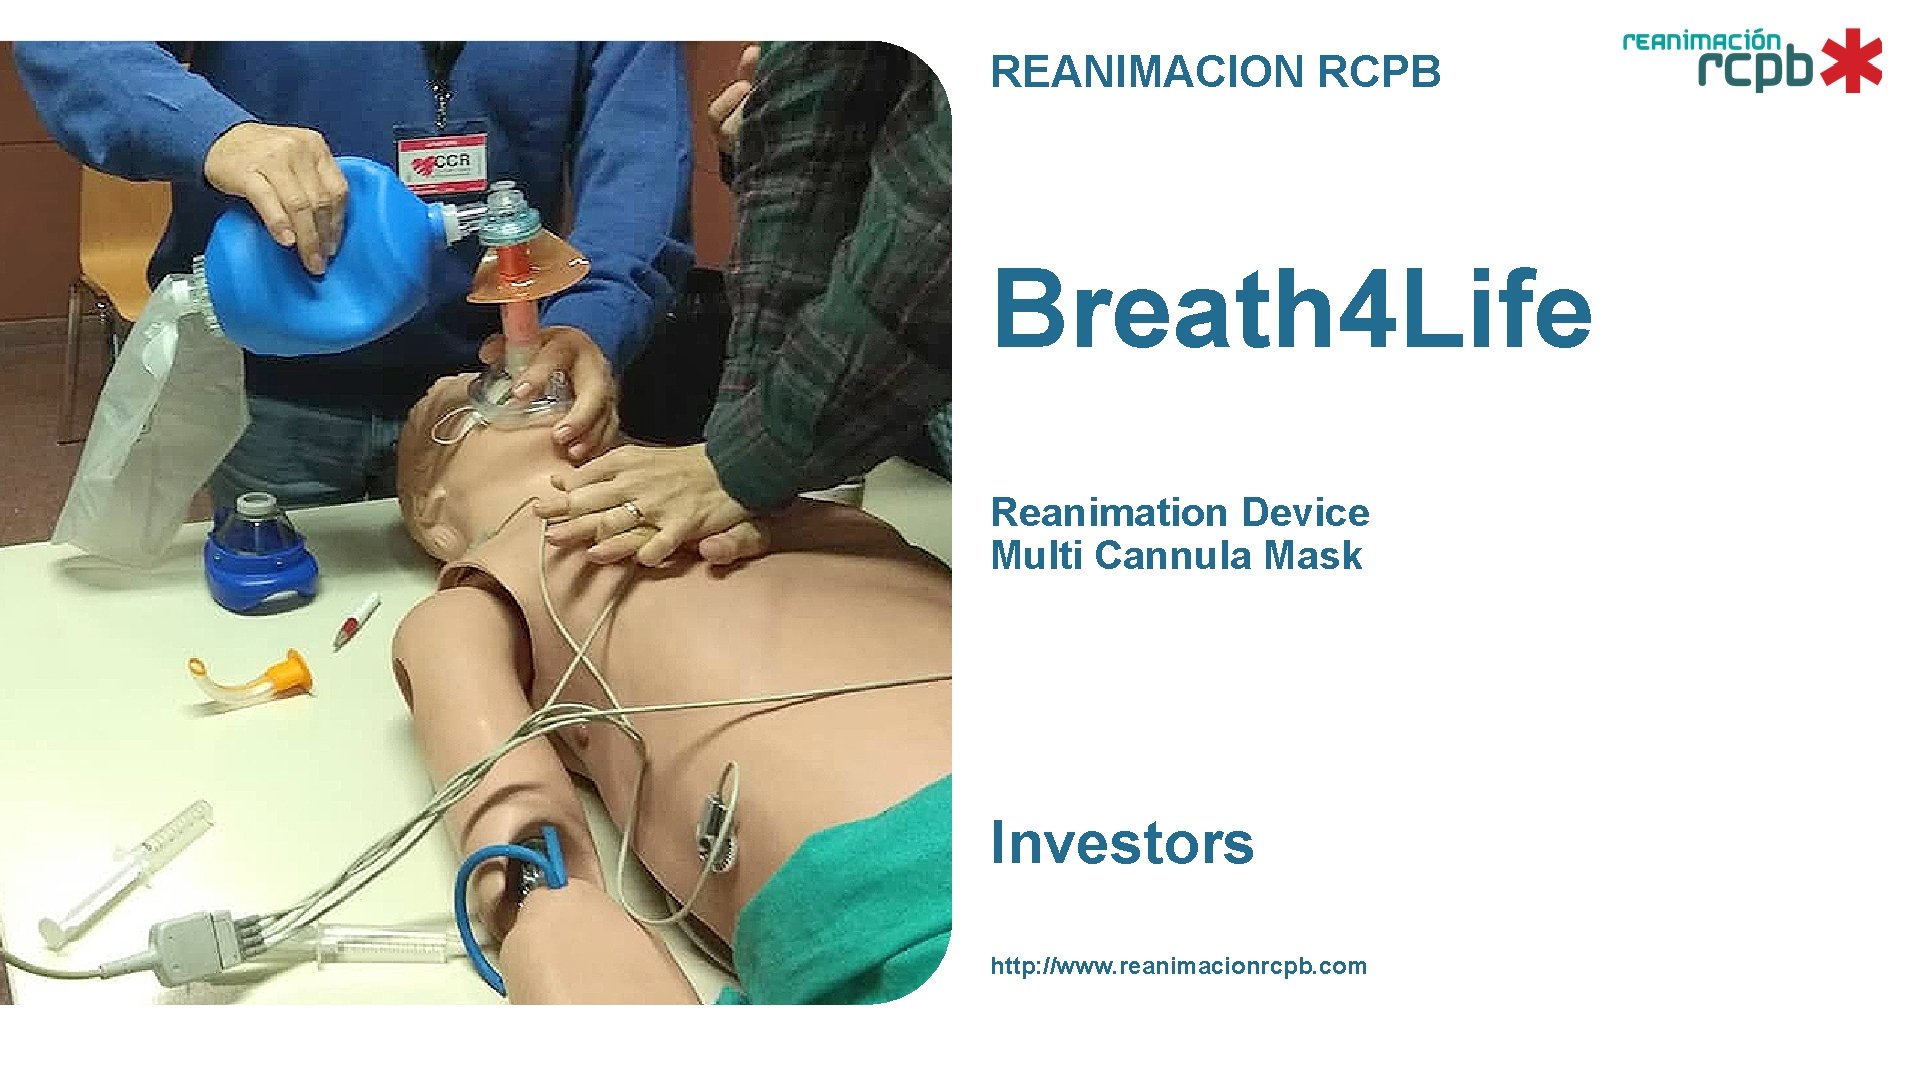 REANIMACION RCPB Breath 4 Life Reanimation Device Multi Cannula Mask Investors http: //www. reanimacionrcpb.